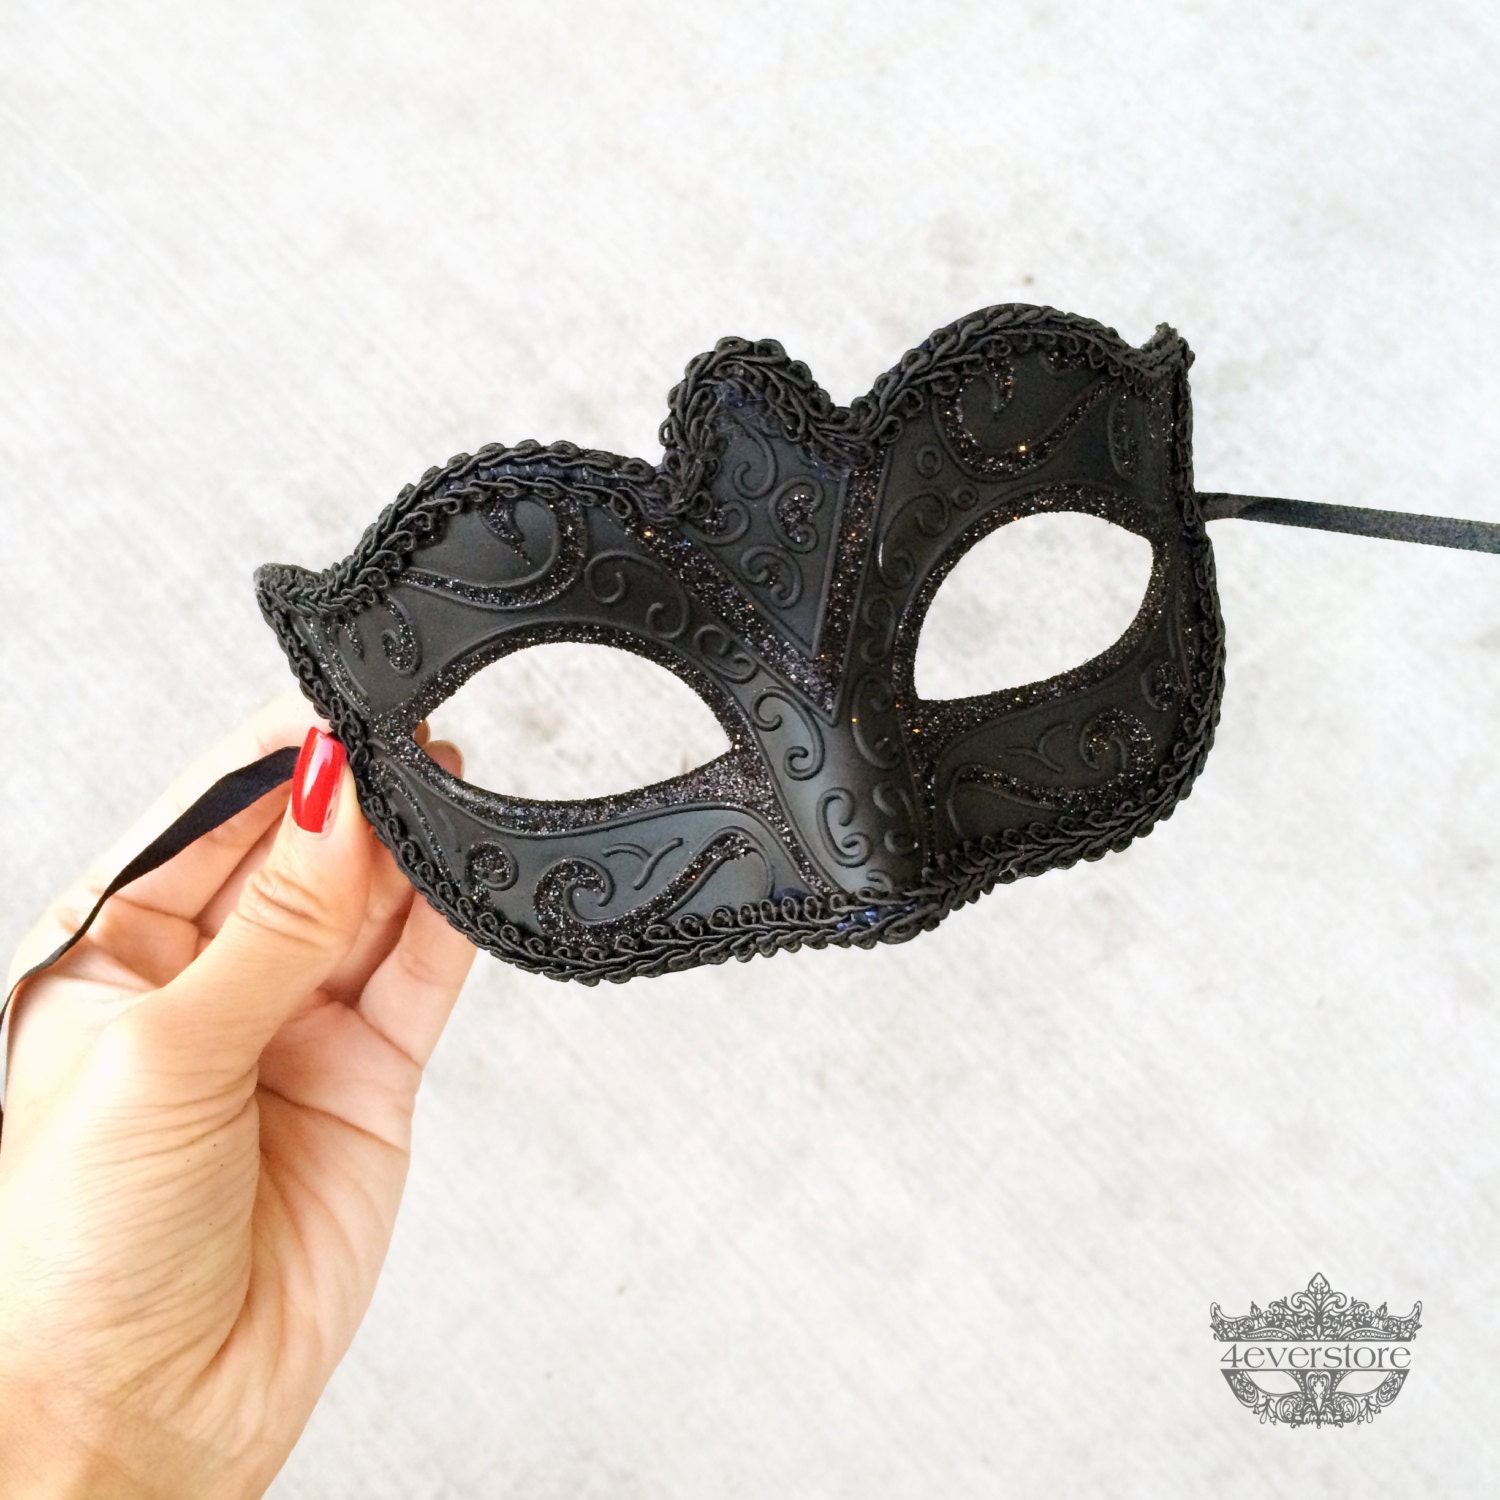 Classic Black Masquerade Mask, Black Mask, Masquerade Ball Mask, Mardi Gras Mask, Mask [Black]